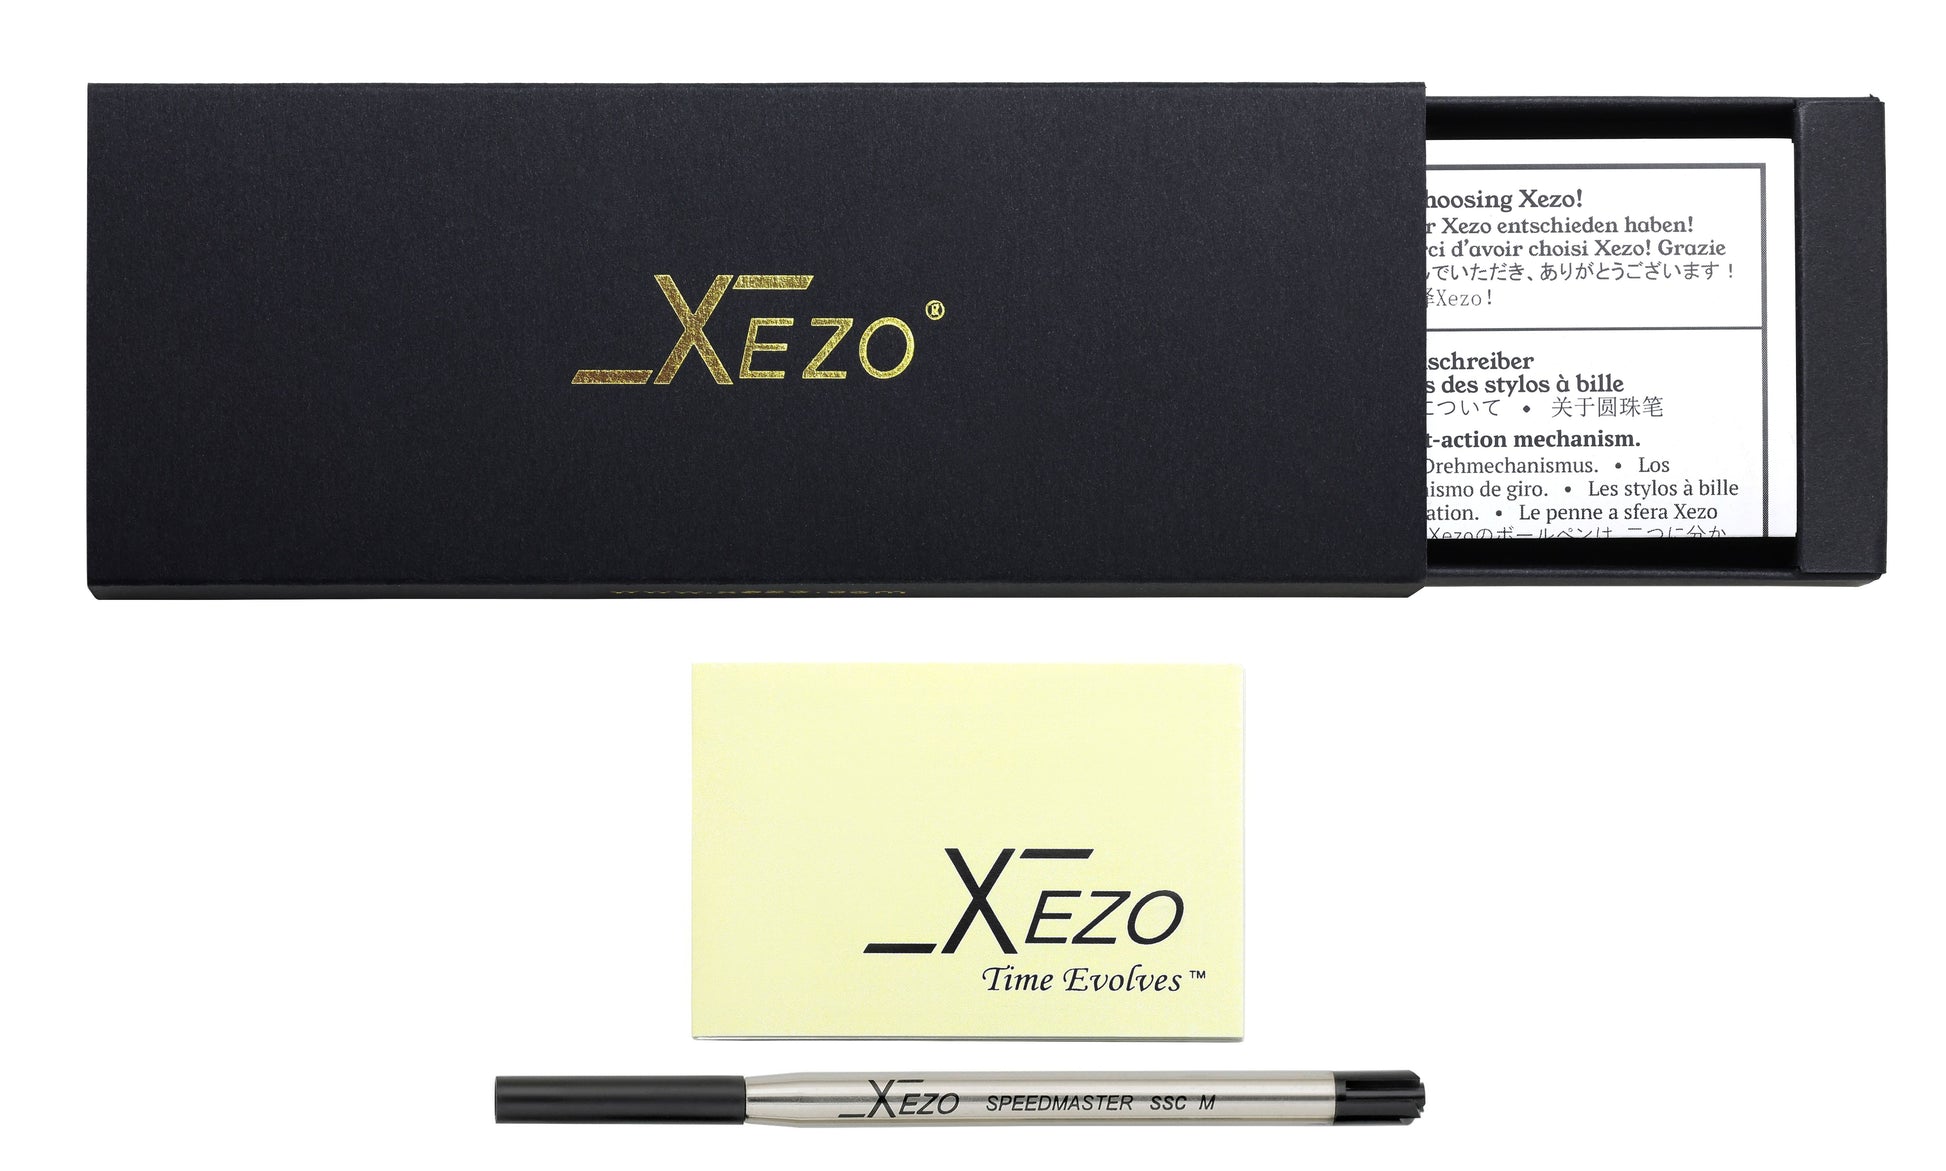 Xezo Speedmaster™ Packaging